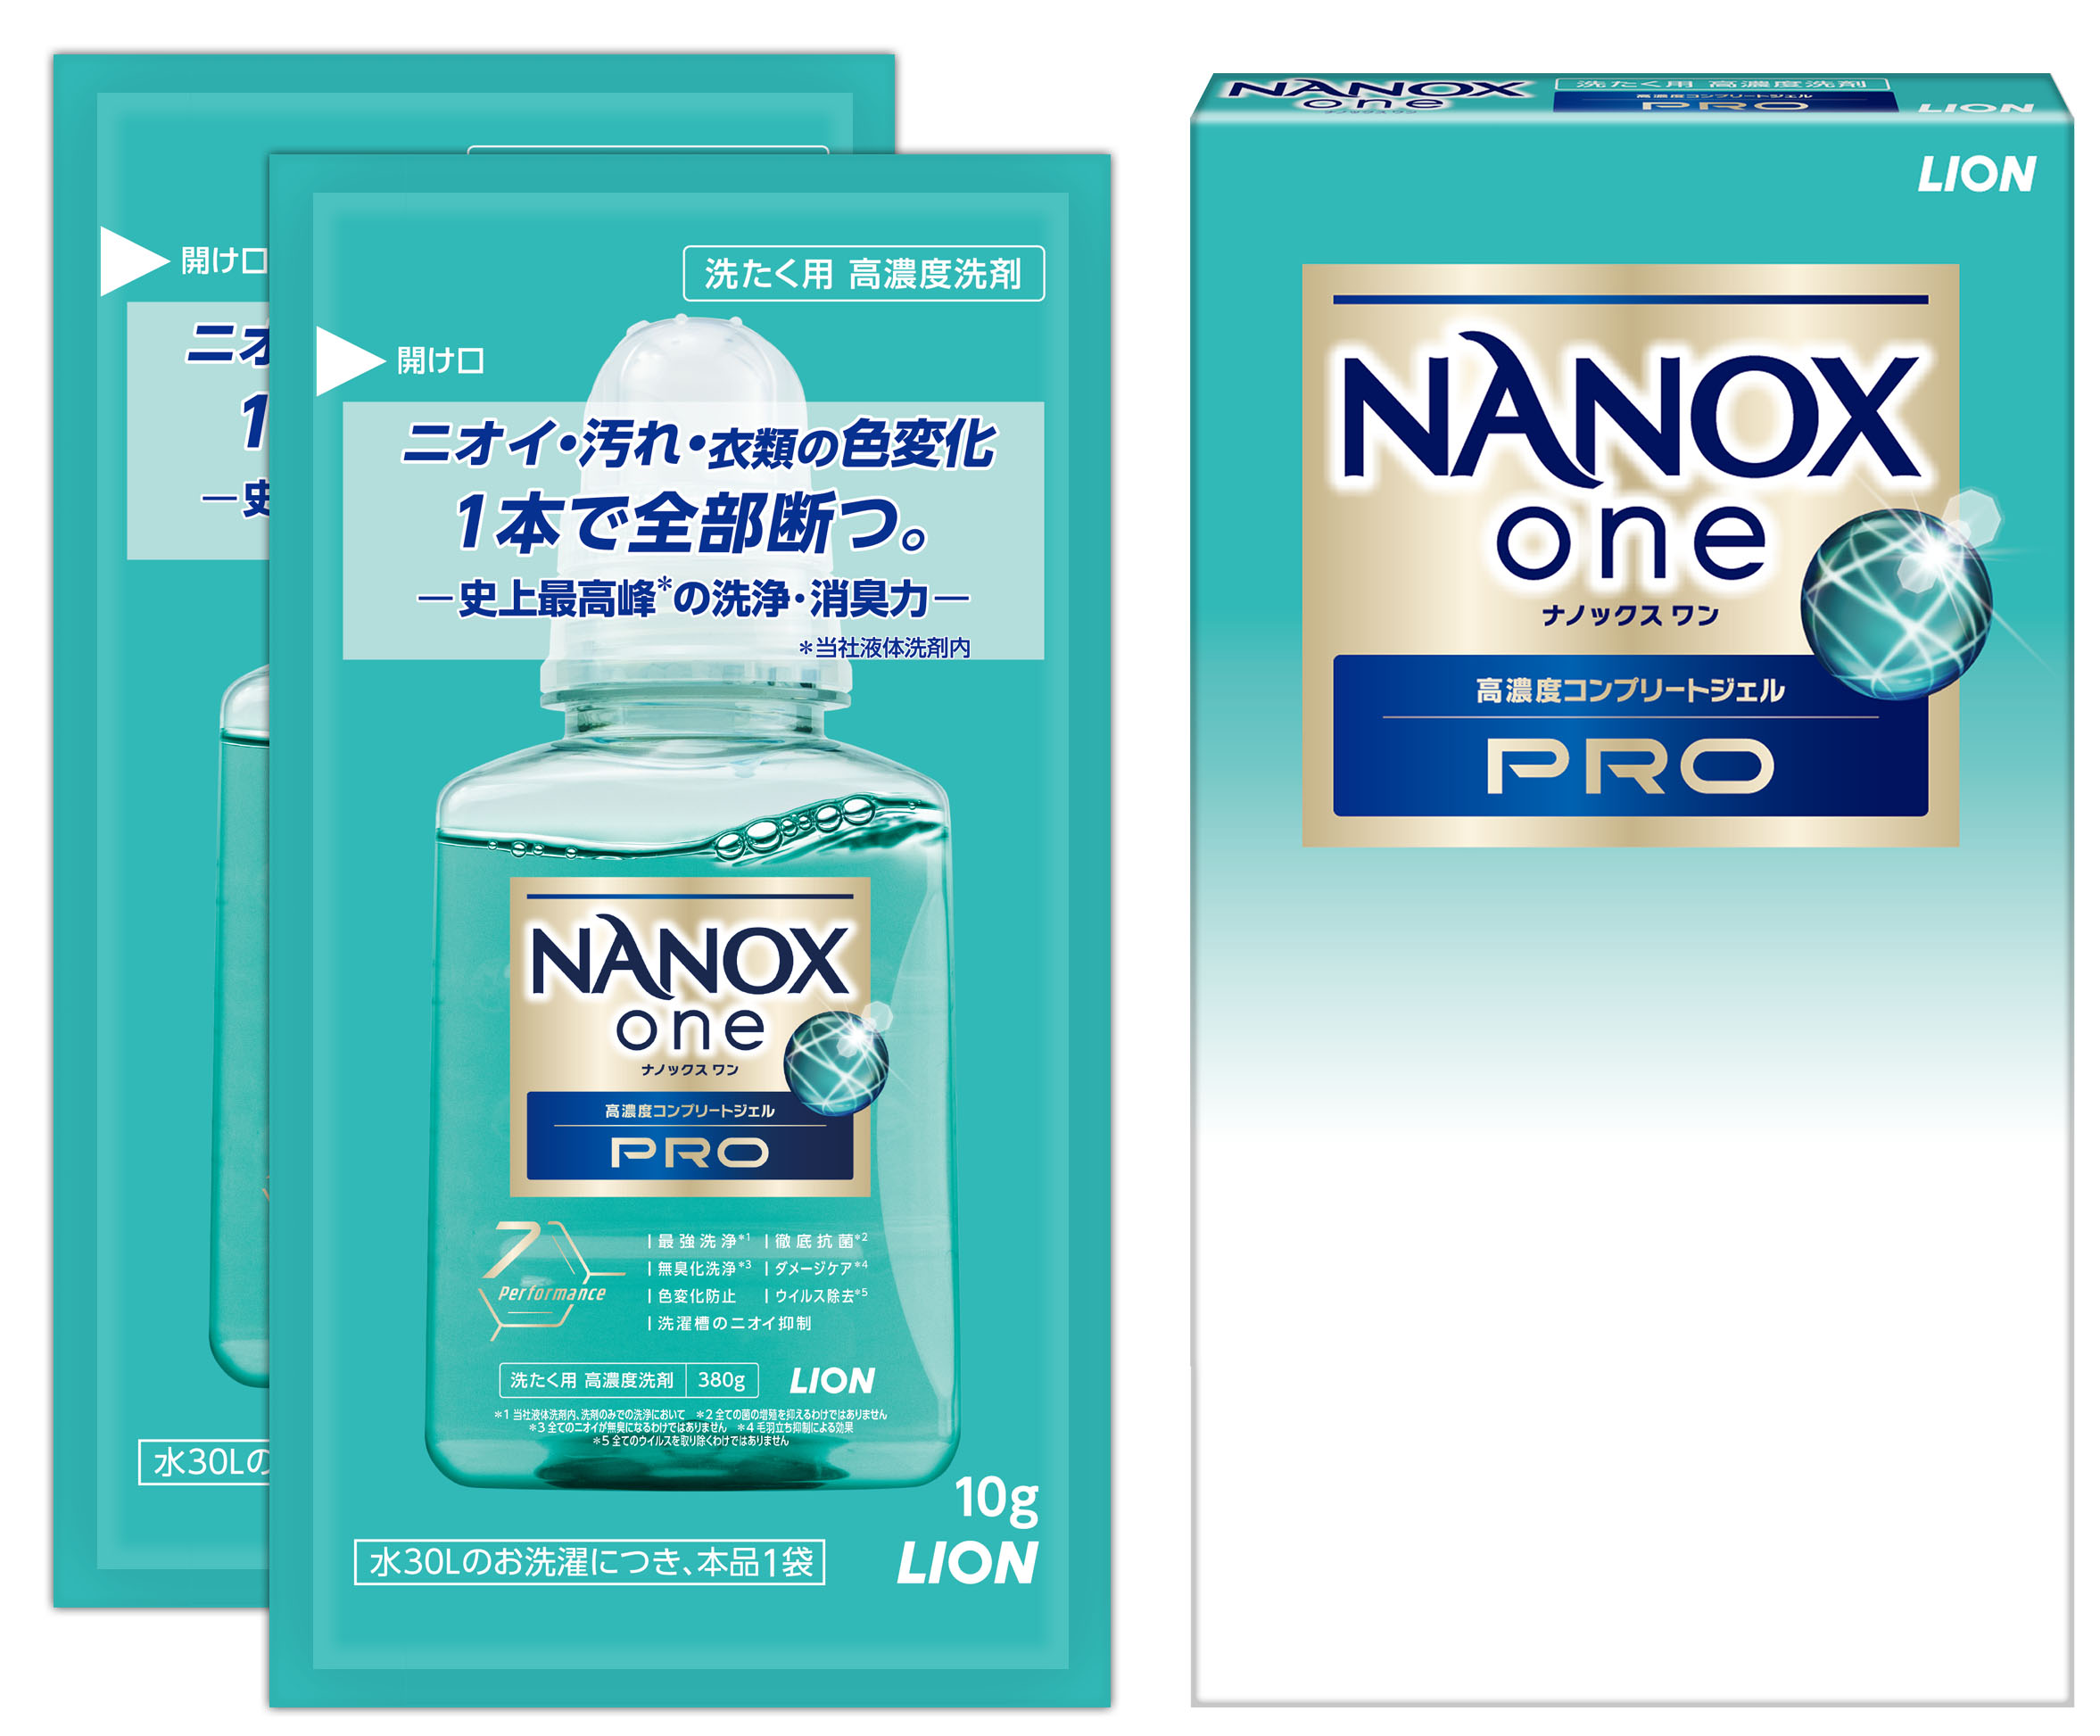 LION NANOX ONE PRO 10g×2袋 ワンパック使い切りタイプ ライオン ノベルティギフト専用品 ナノックスワン 携帯用 最強洗浄 消臭  防臭 抗菌 旅行・出張・病院・コインランドリーなどにおすすめ | するがや